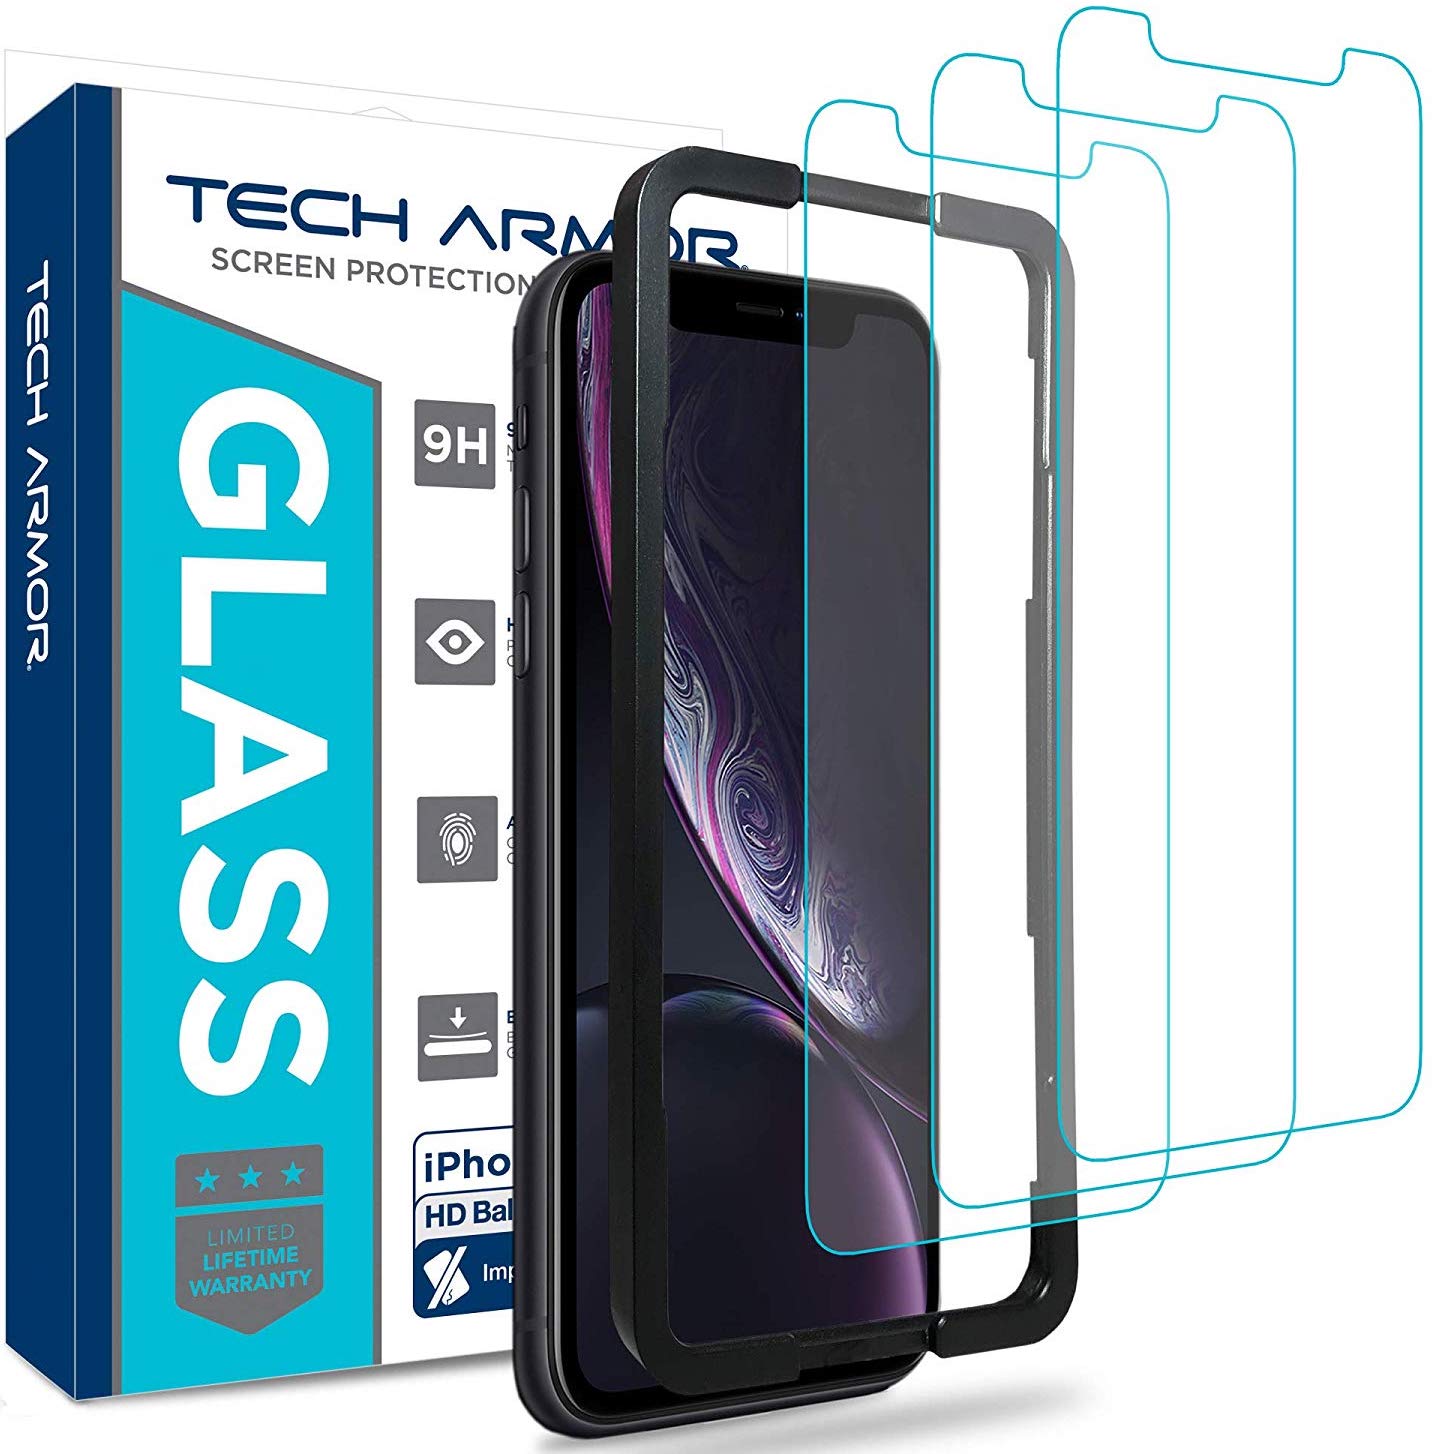 Tech Armor ballistic glass screen protector iPhone XR product